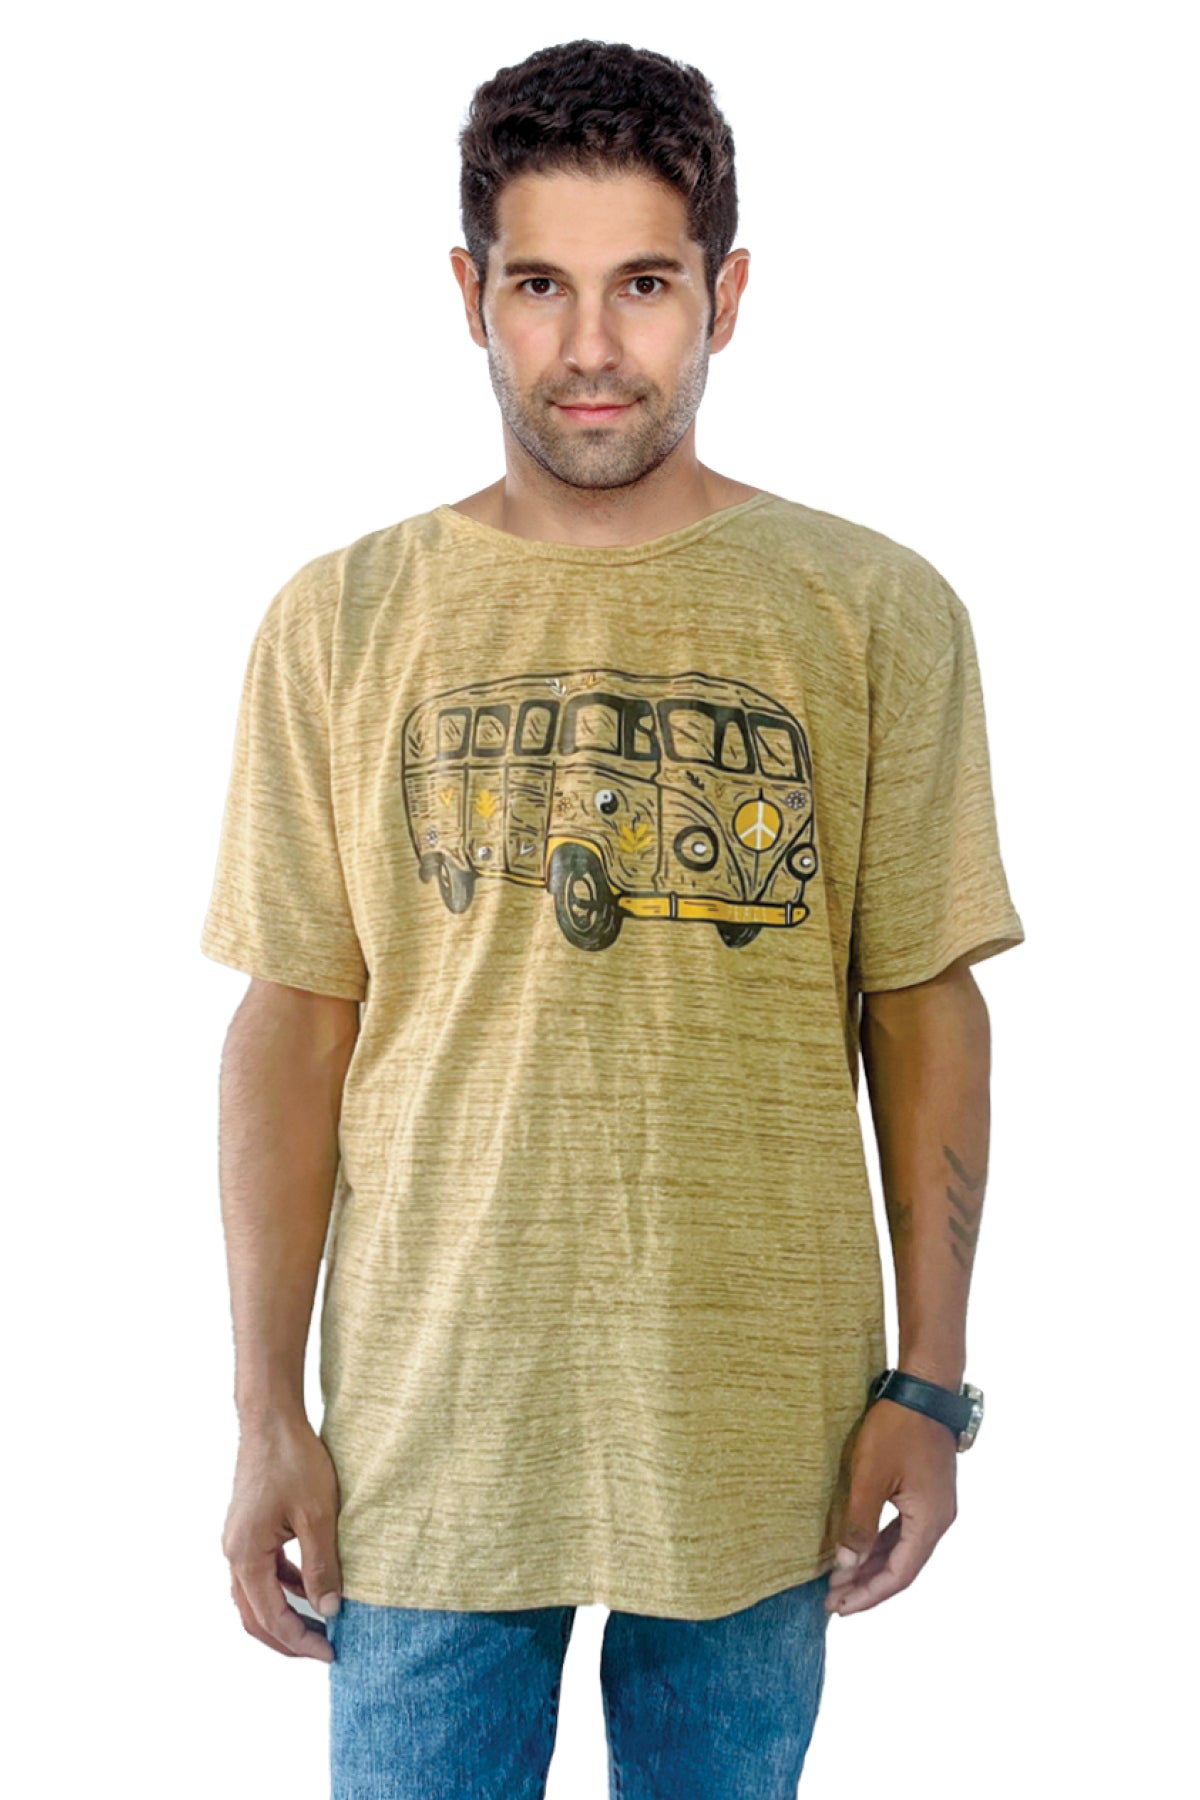 Men's T Shirt Van Life Print Boho